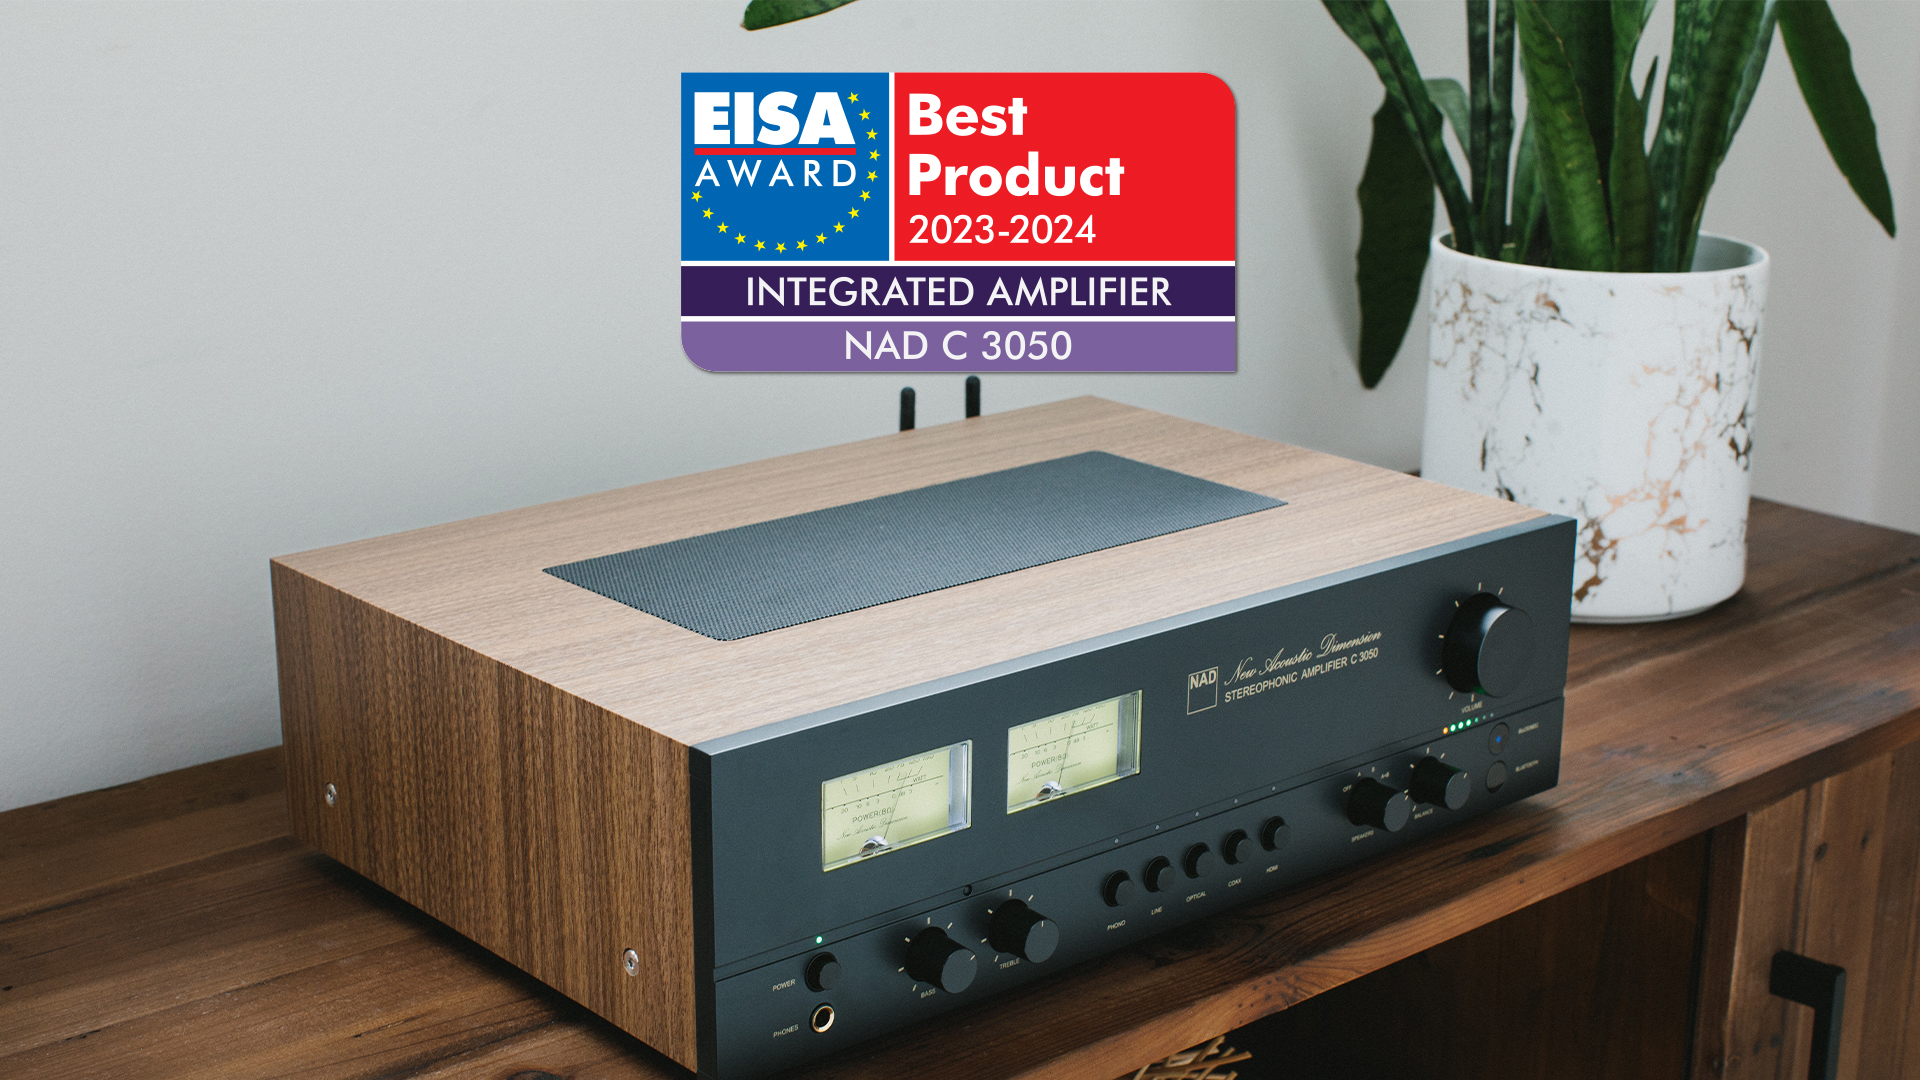 NAD C3050: EISA Best Integrated Amplifier